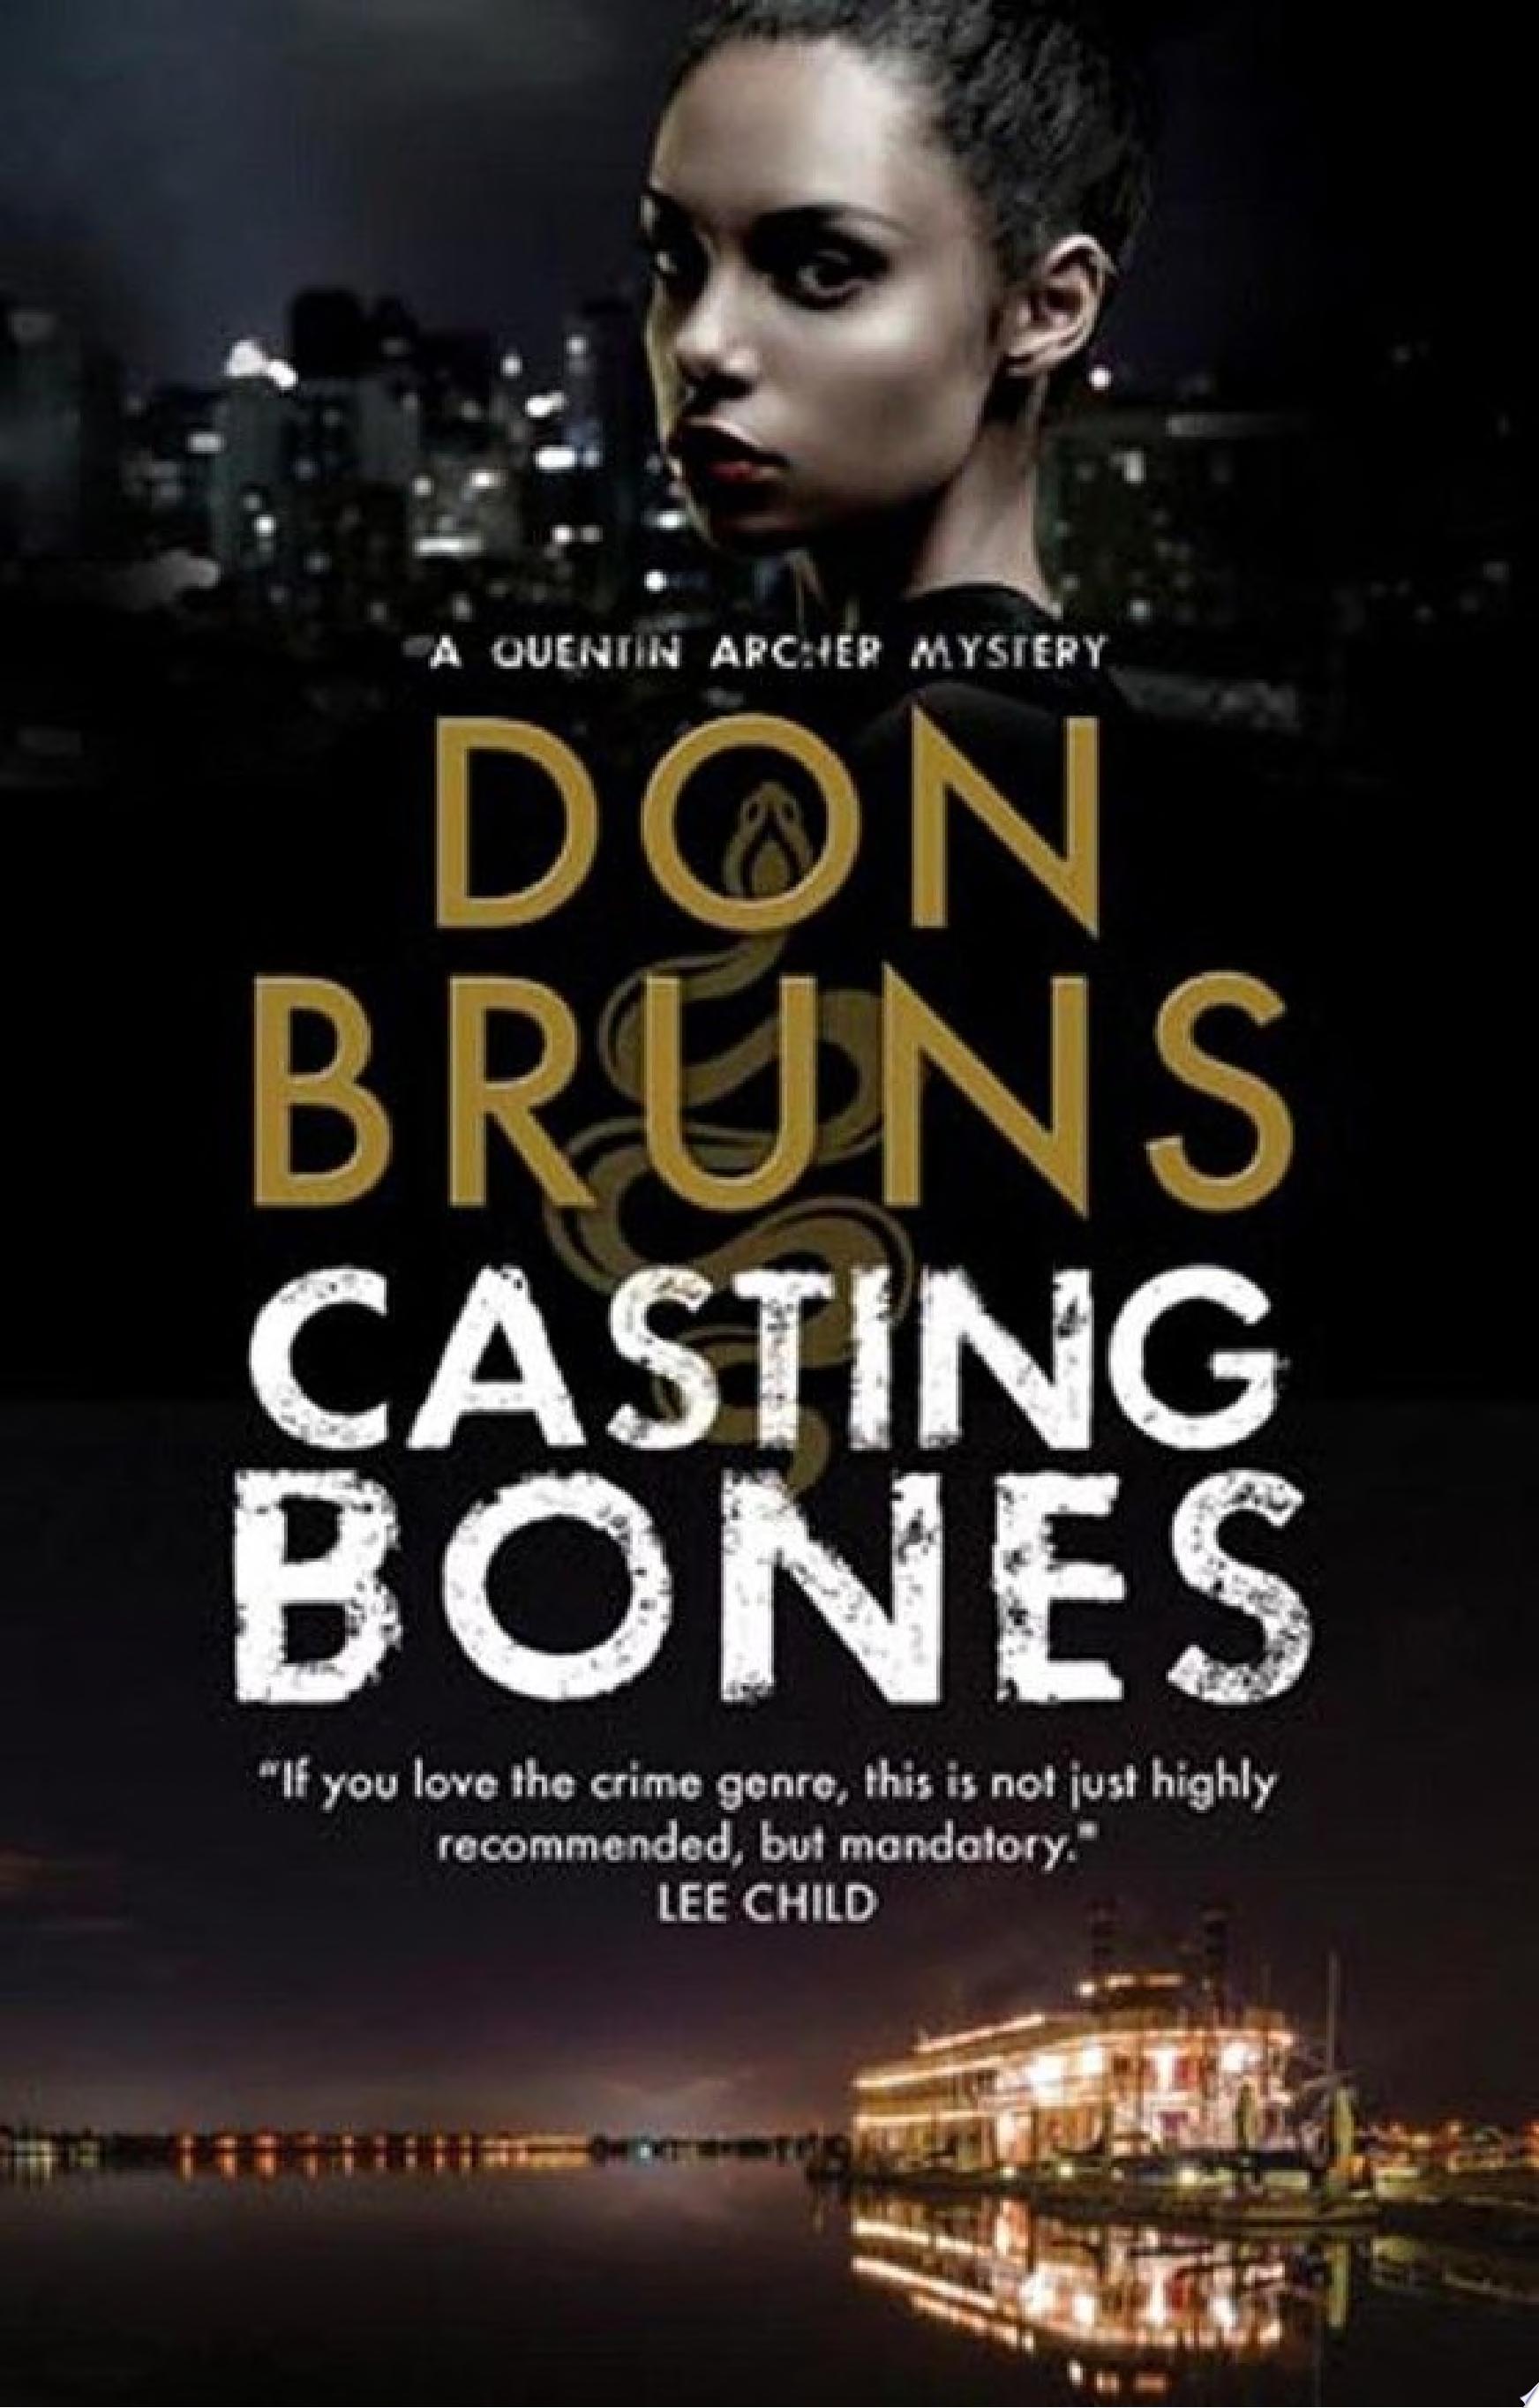 Image for "Casting Bones"